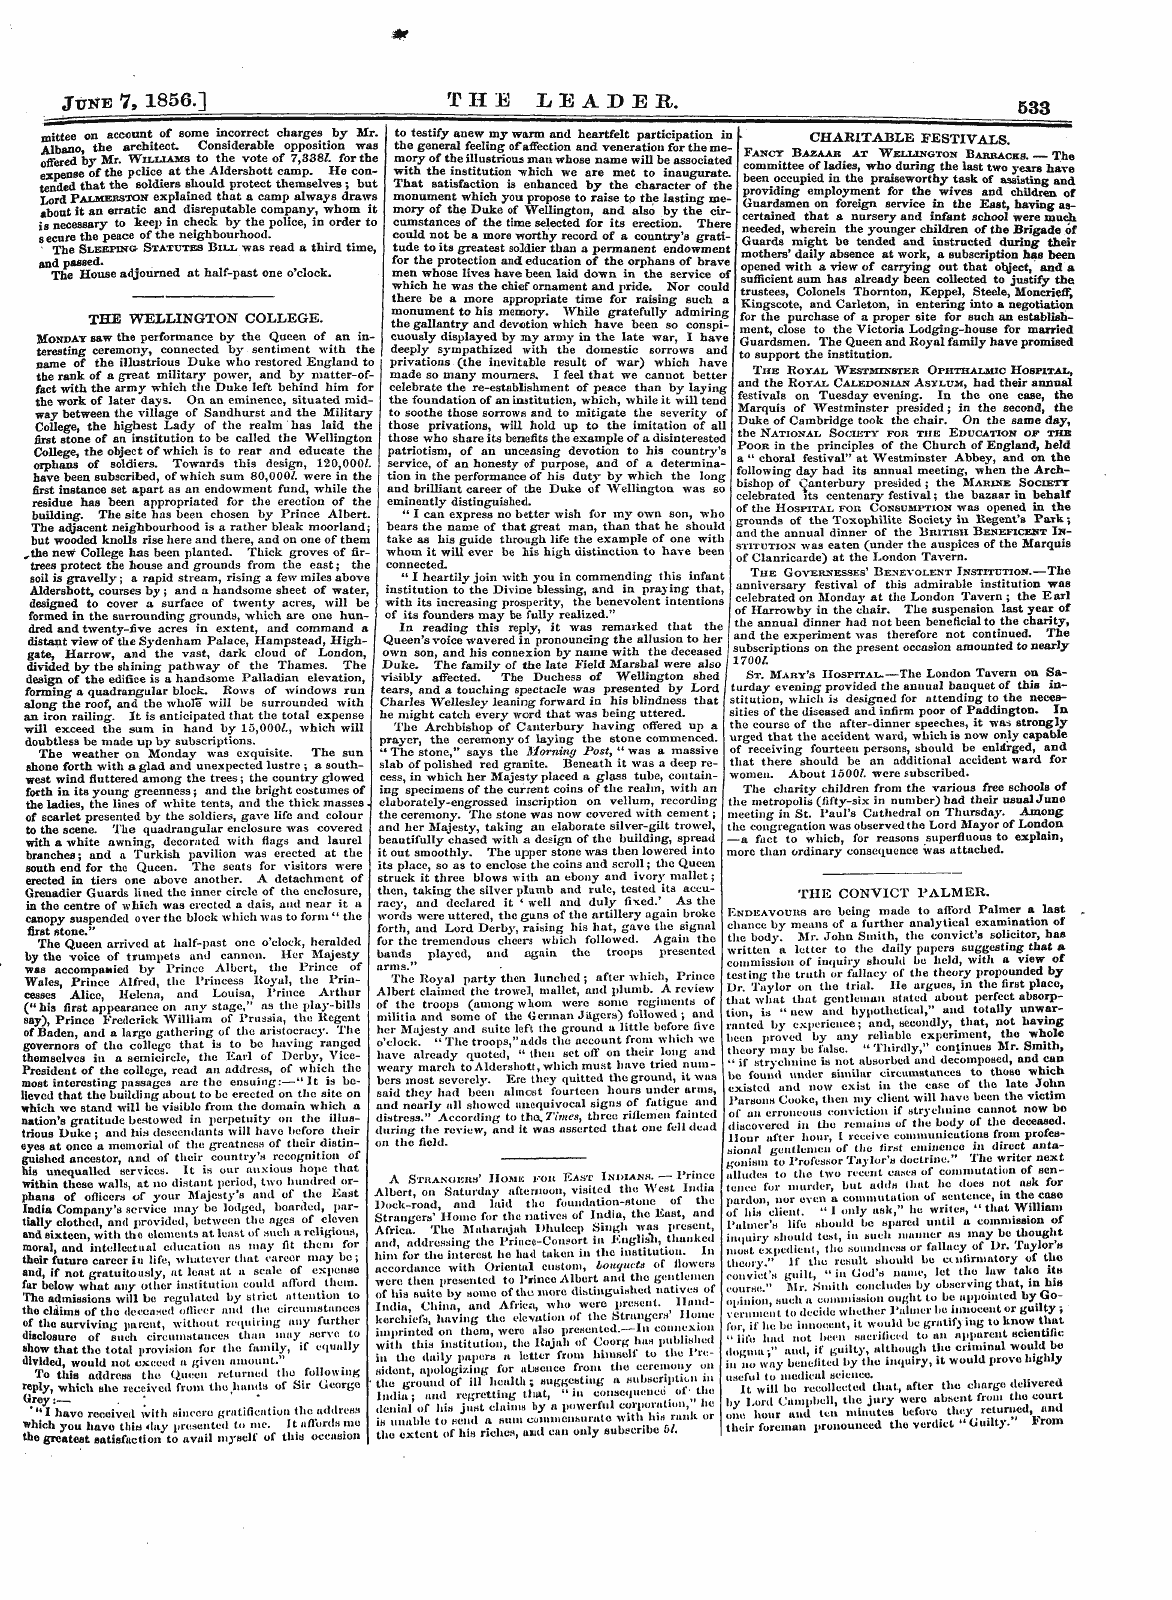 Leader (1850-1860): jS F Y, 2nd edition - June 7, 1856.] The Leader. 533